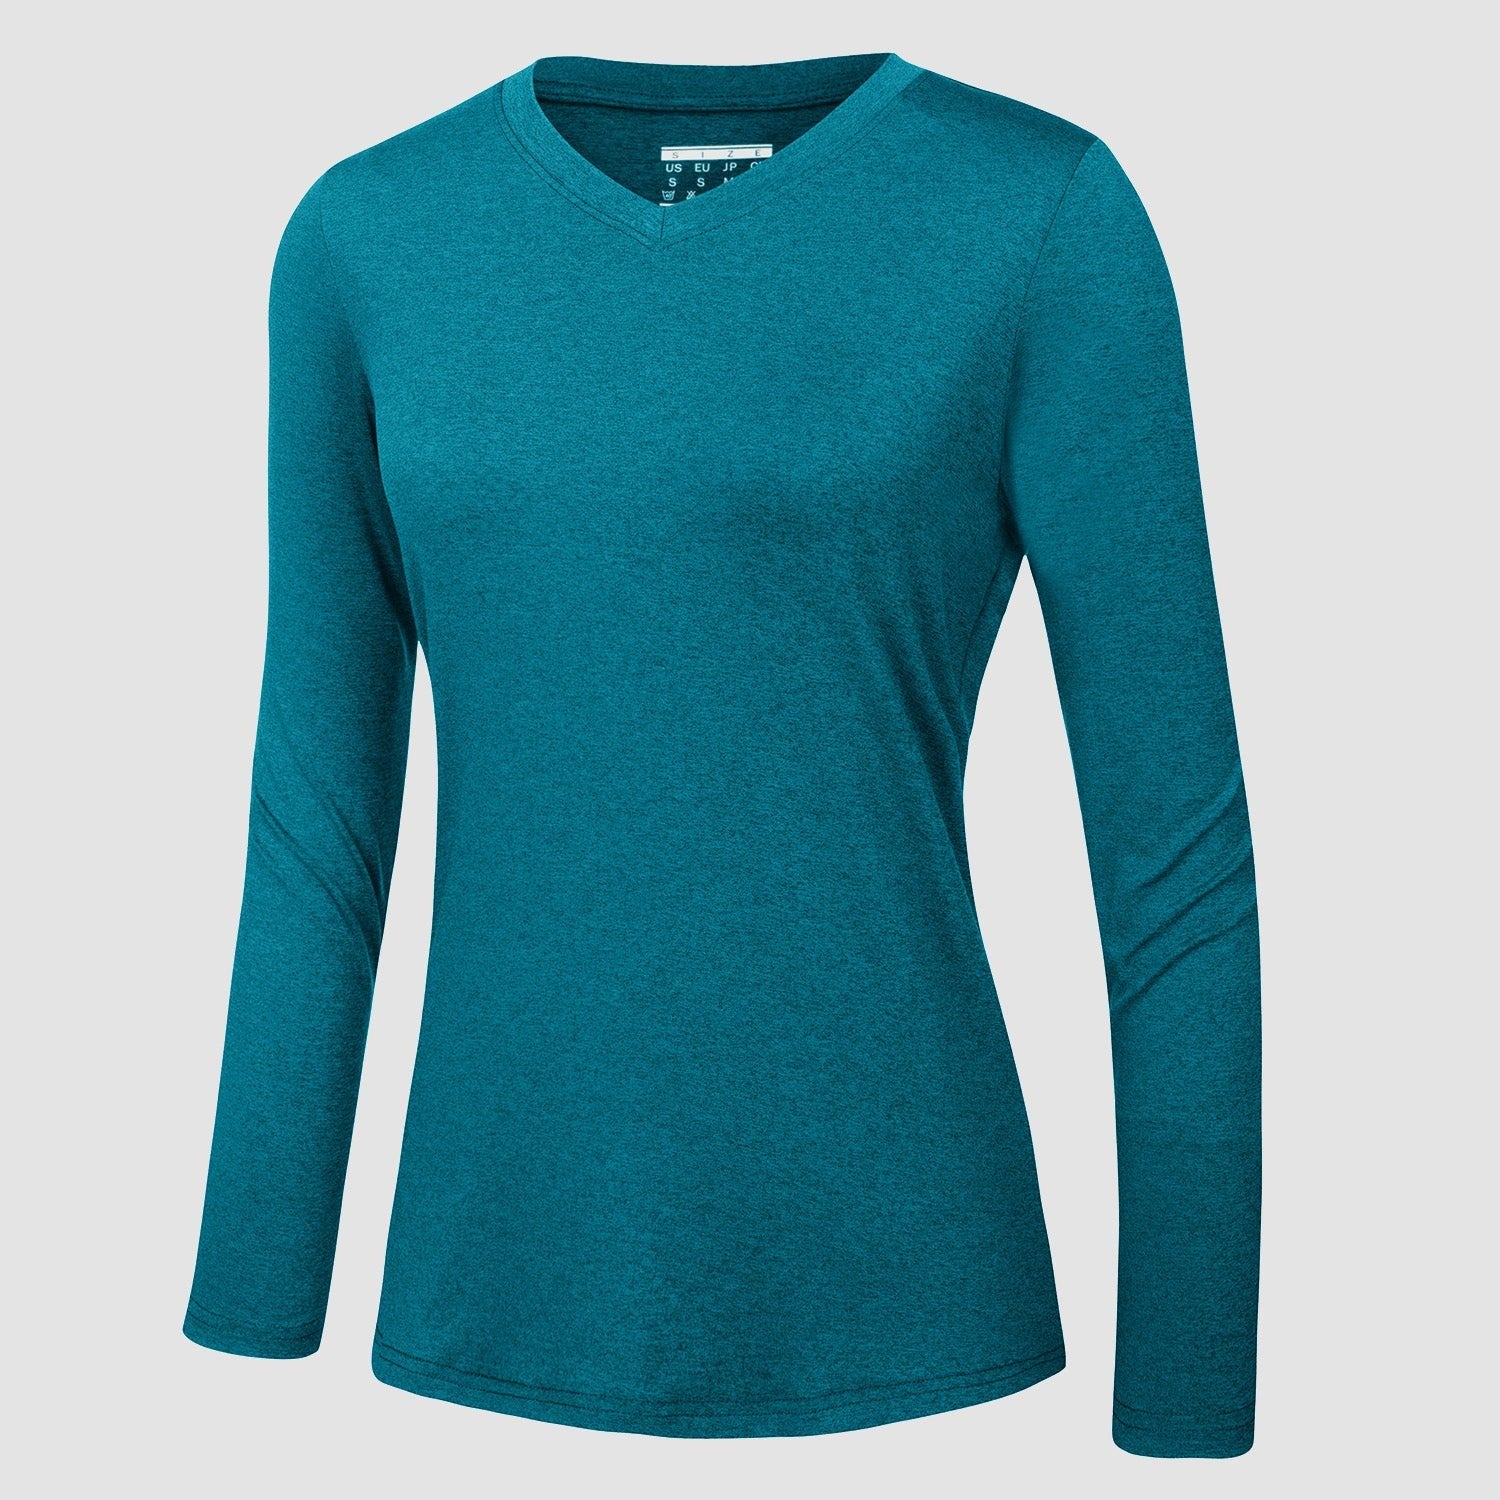 Women's Long Sleeve Shirt V Neck SPF Shirts UPF 50+ Quick Dry Workout Hiking Tee Shirts Rashguard, Jade Green / M